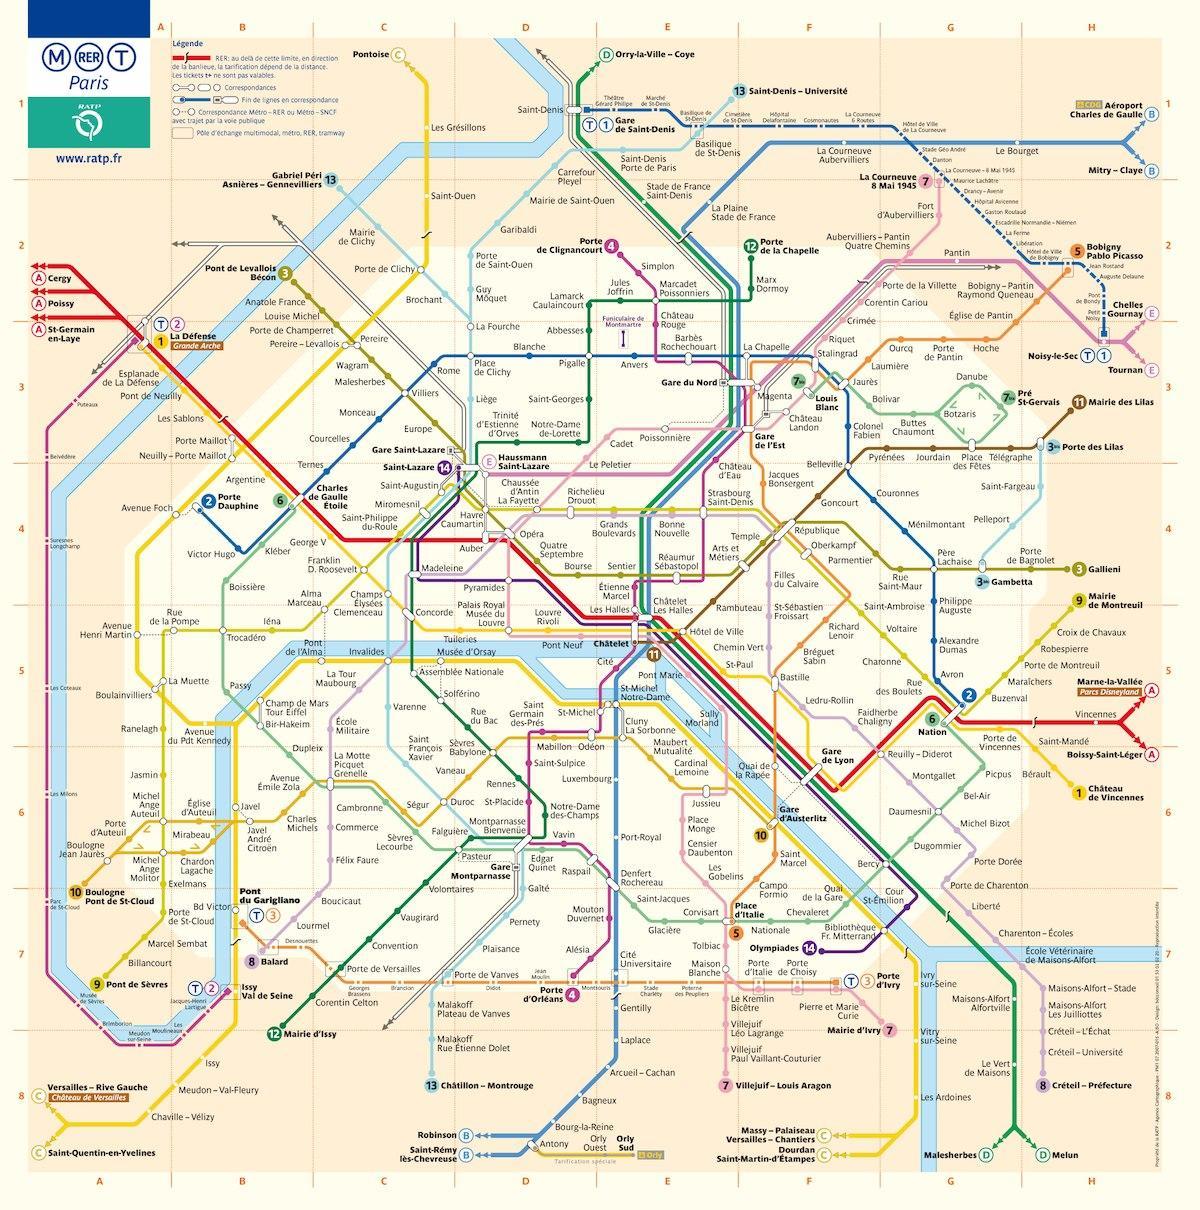 Вашингтон округ Колумбия карта метро с улицами